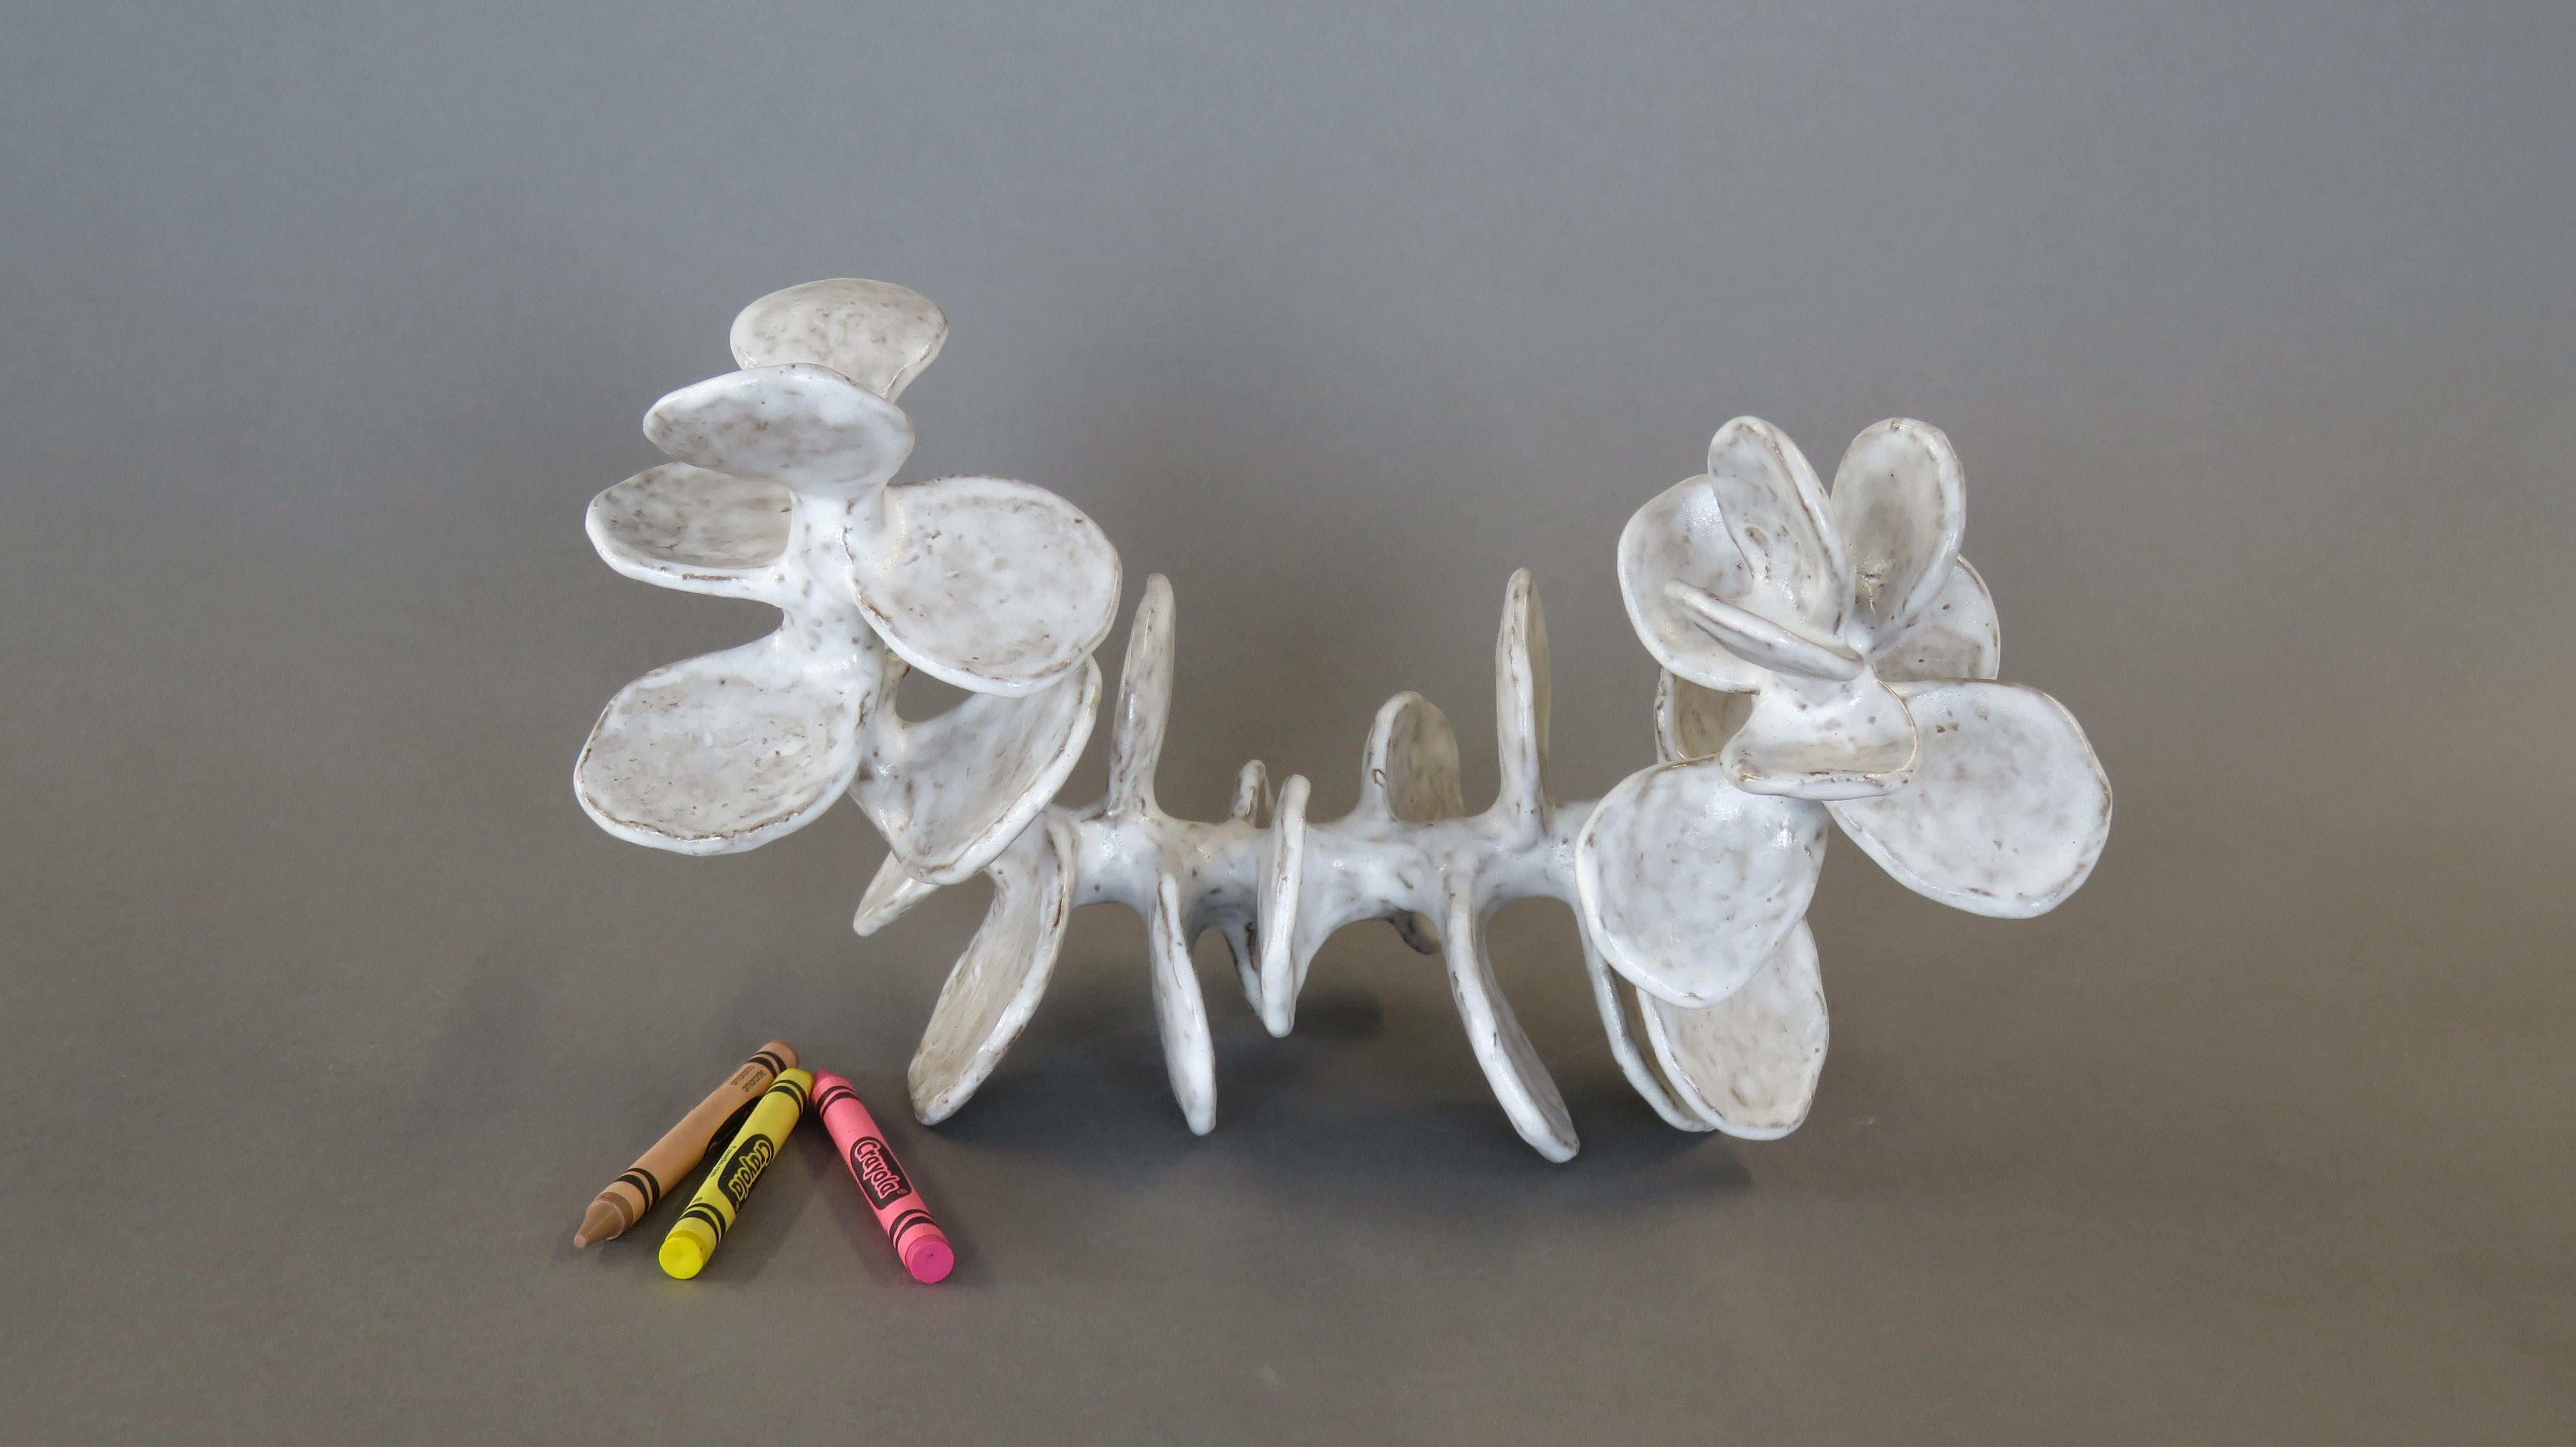 Handgefertigte Keramik-Skulptur:: Liegende Skelett-Wirbelsäule in gesprenkeltem Weiß 12